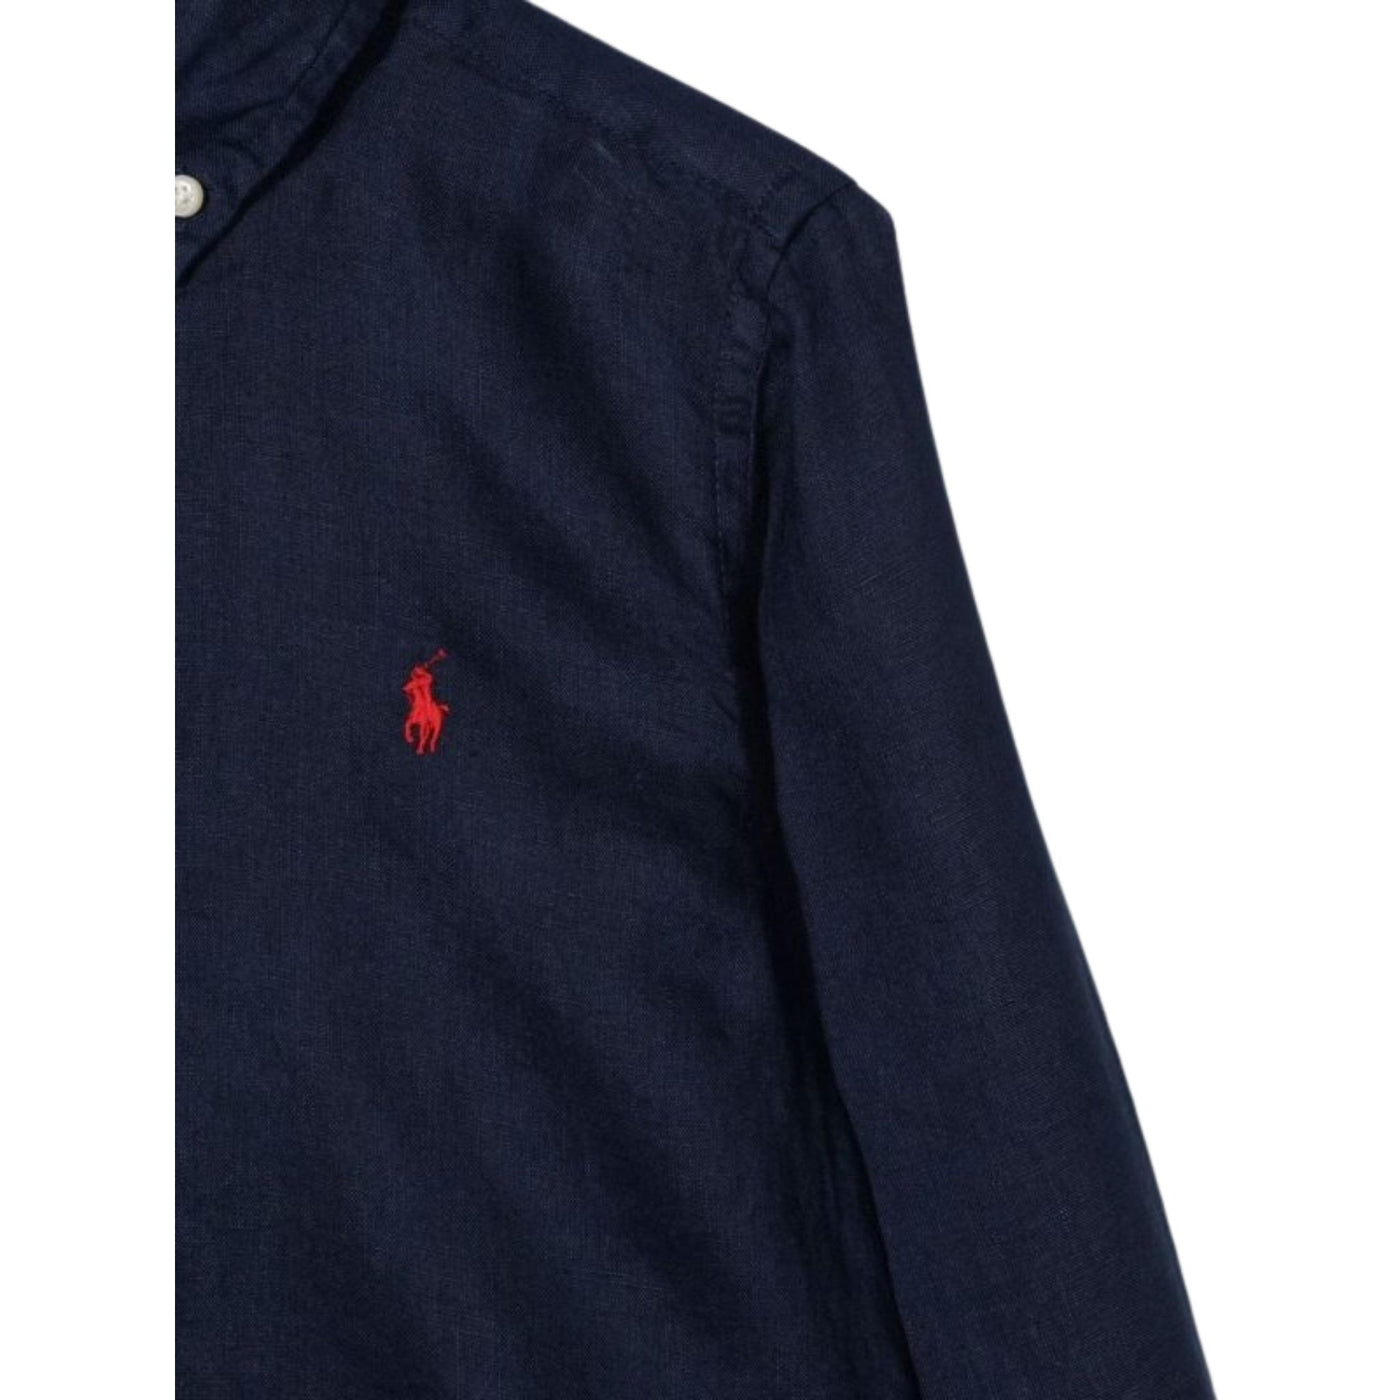 Camicia Bambino Blu navy Polo Ralph Lauren dettaglio logo